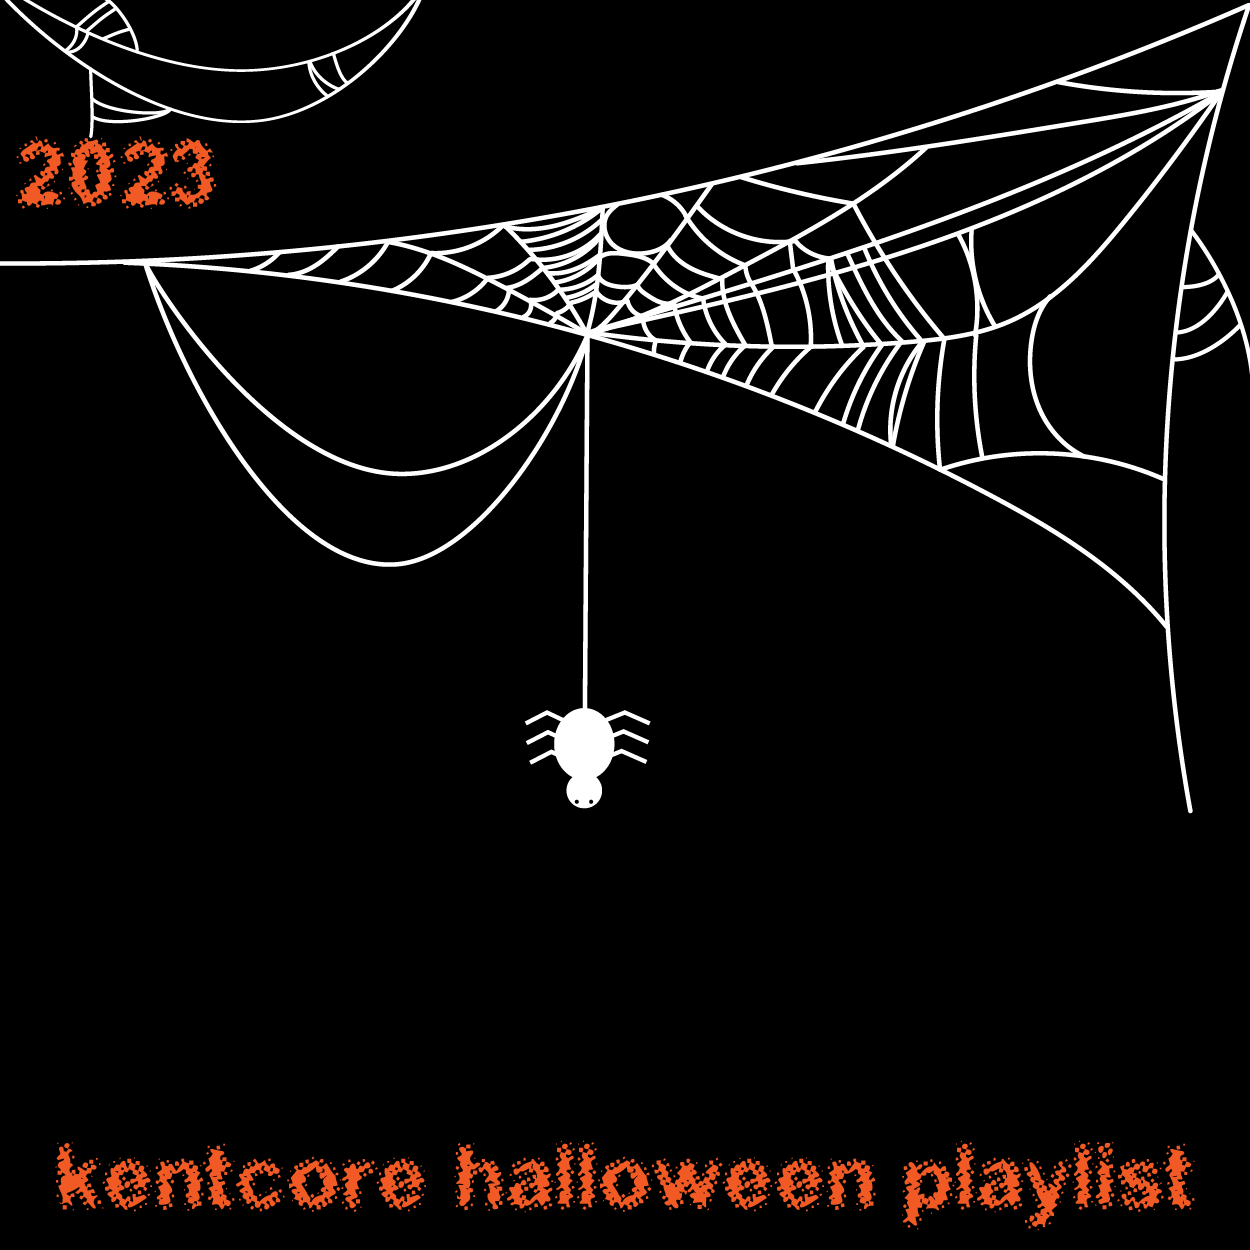 A Very Spooky Kentcore Playlist